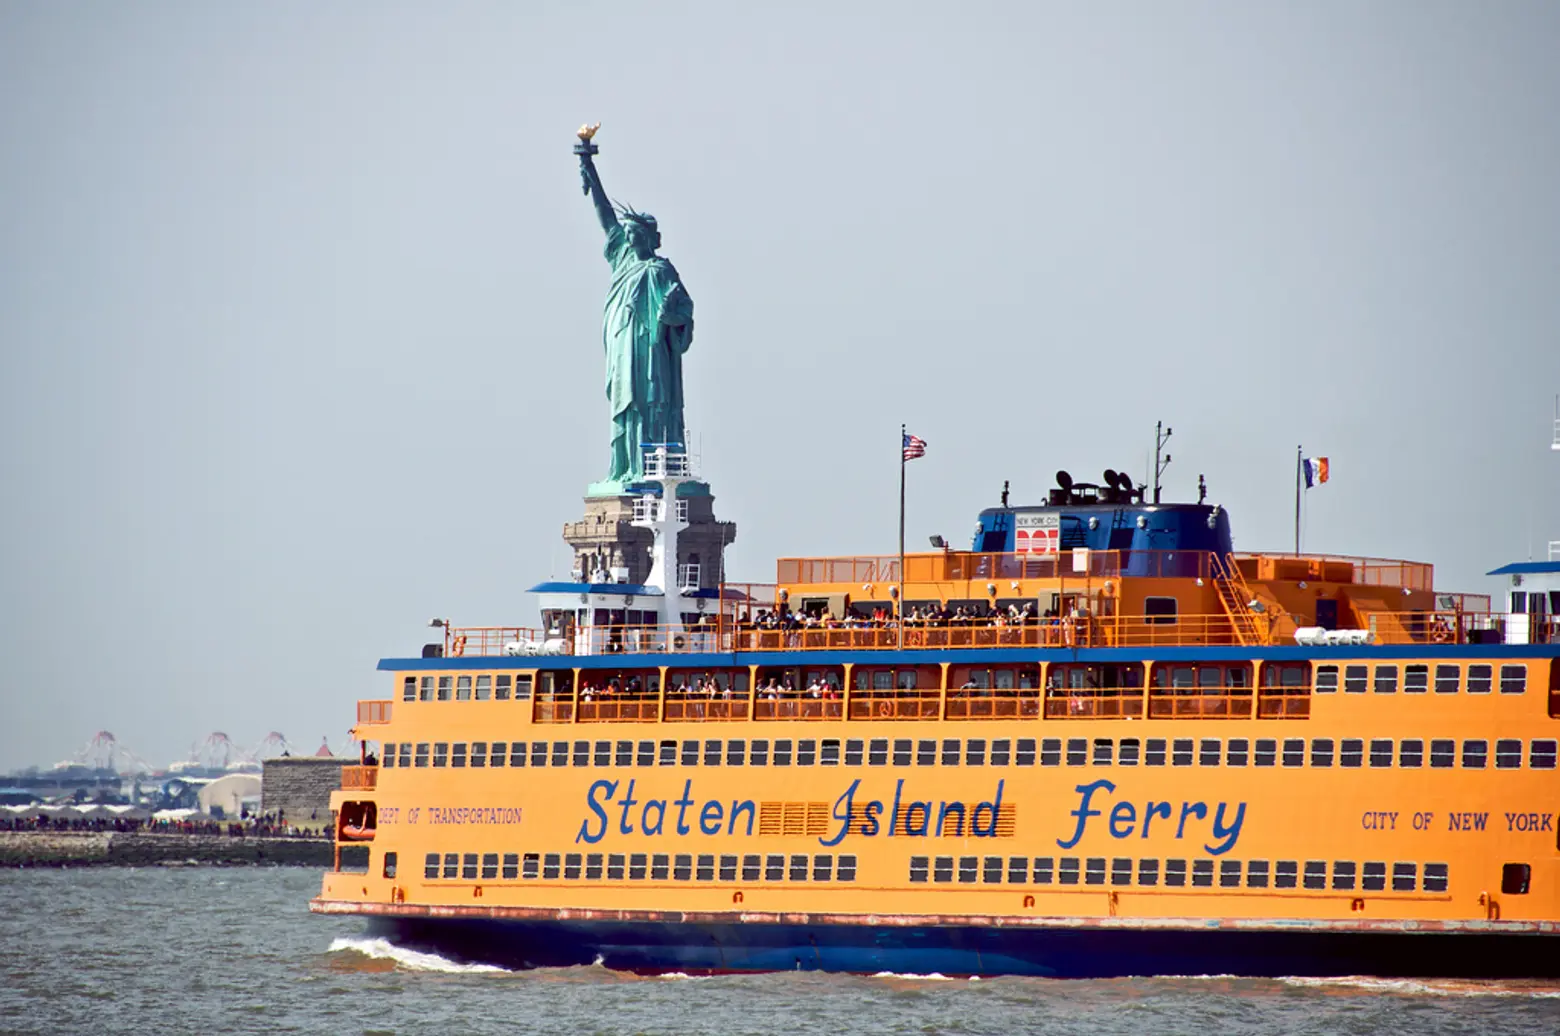 Visit the Staten Island Ferry.